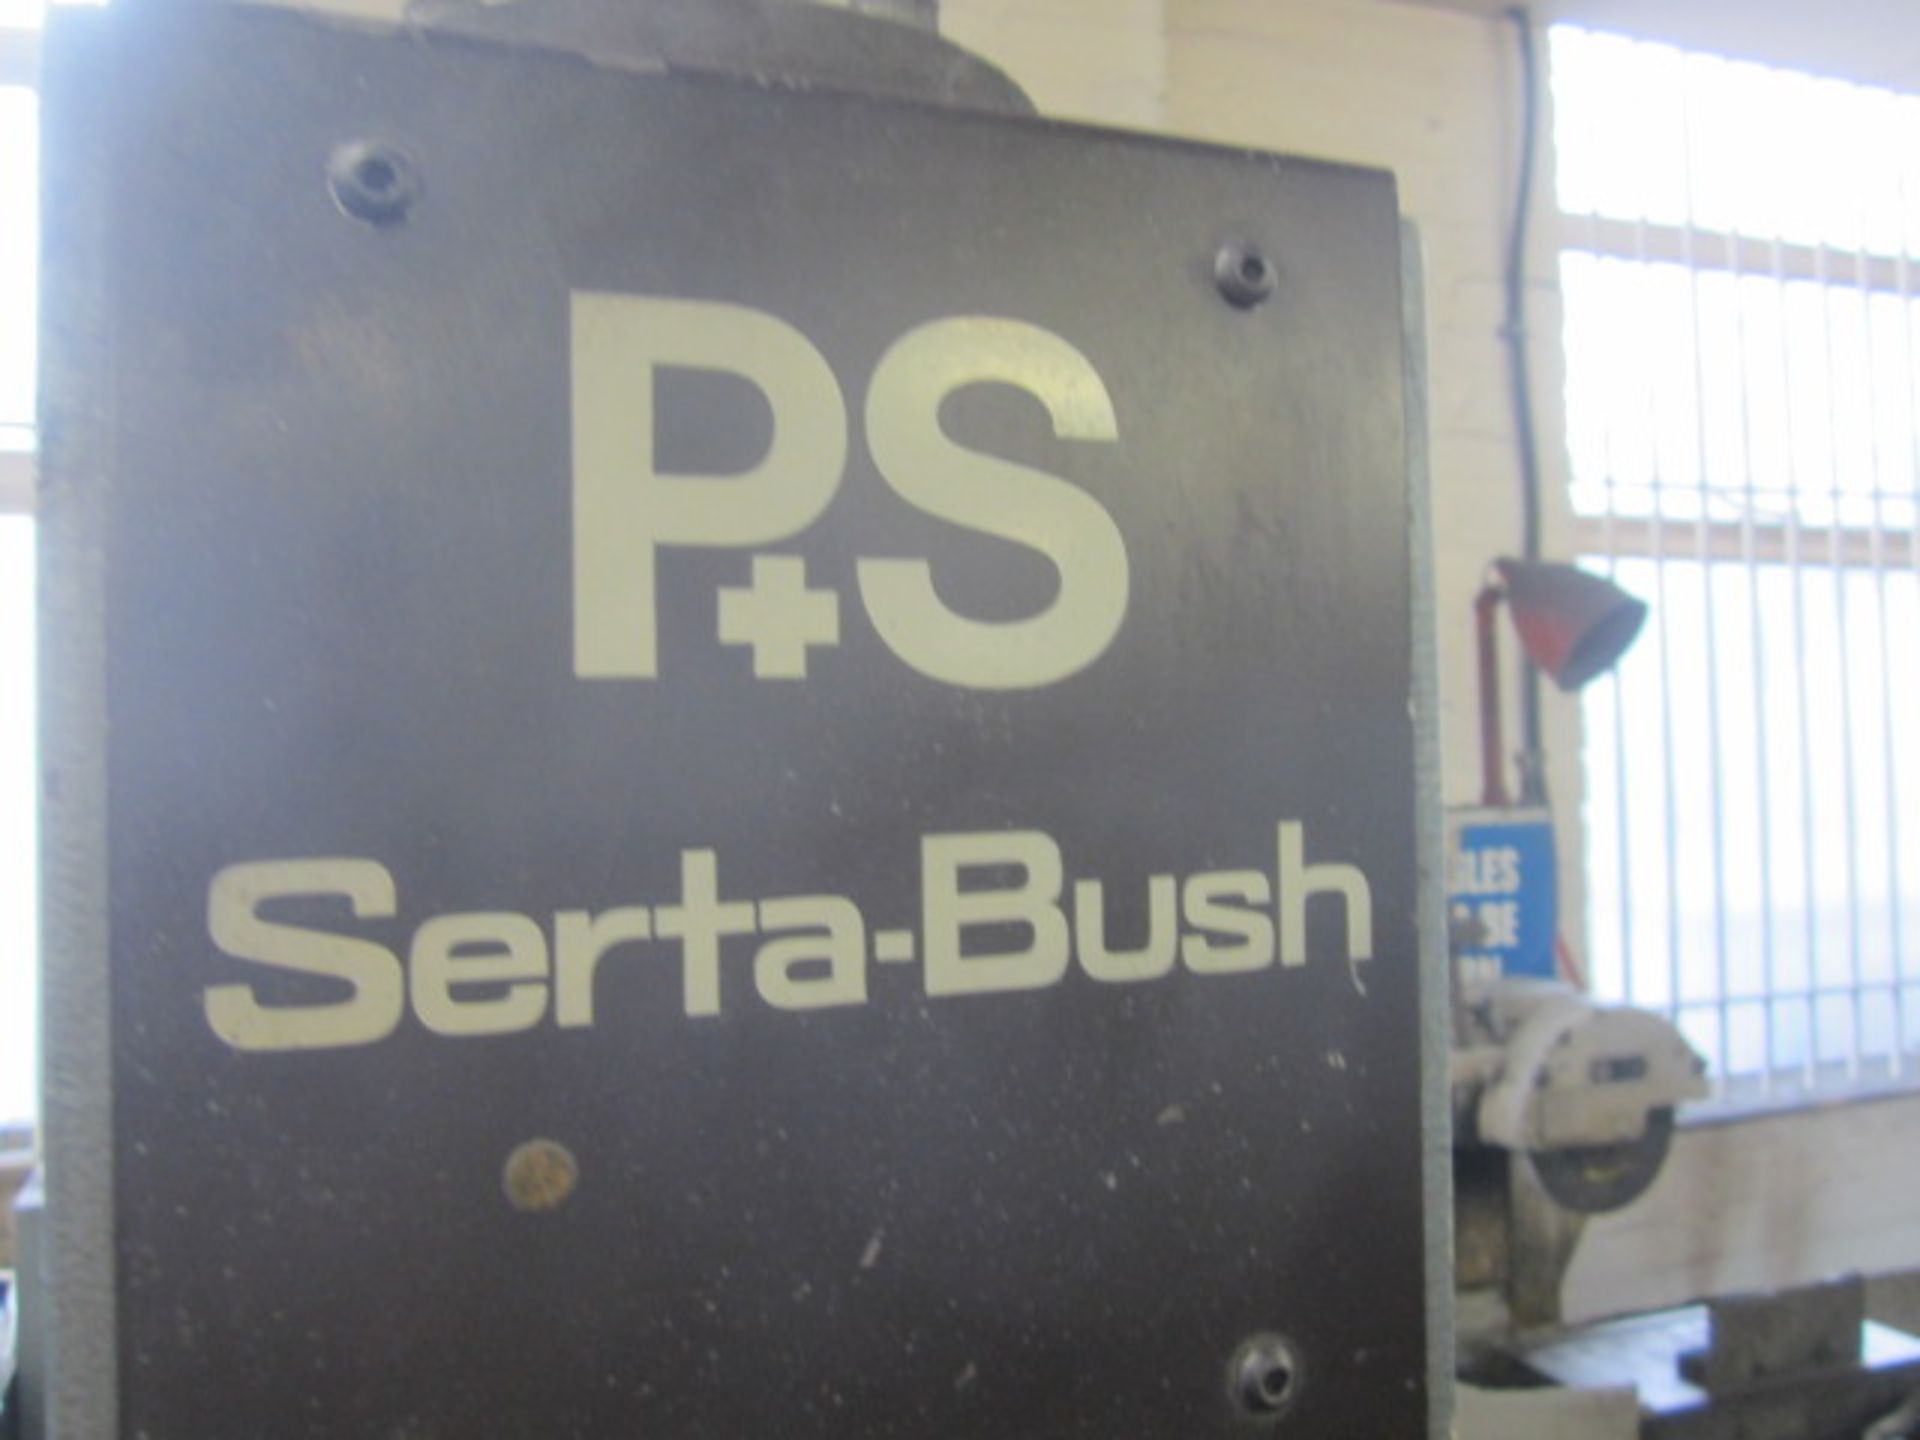 Press & Shear Serta bush model 500 press, pressure capacity 8.5 ton (max 10 ton), M2.5 to M12 into - Image 6 of 9